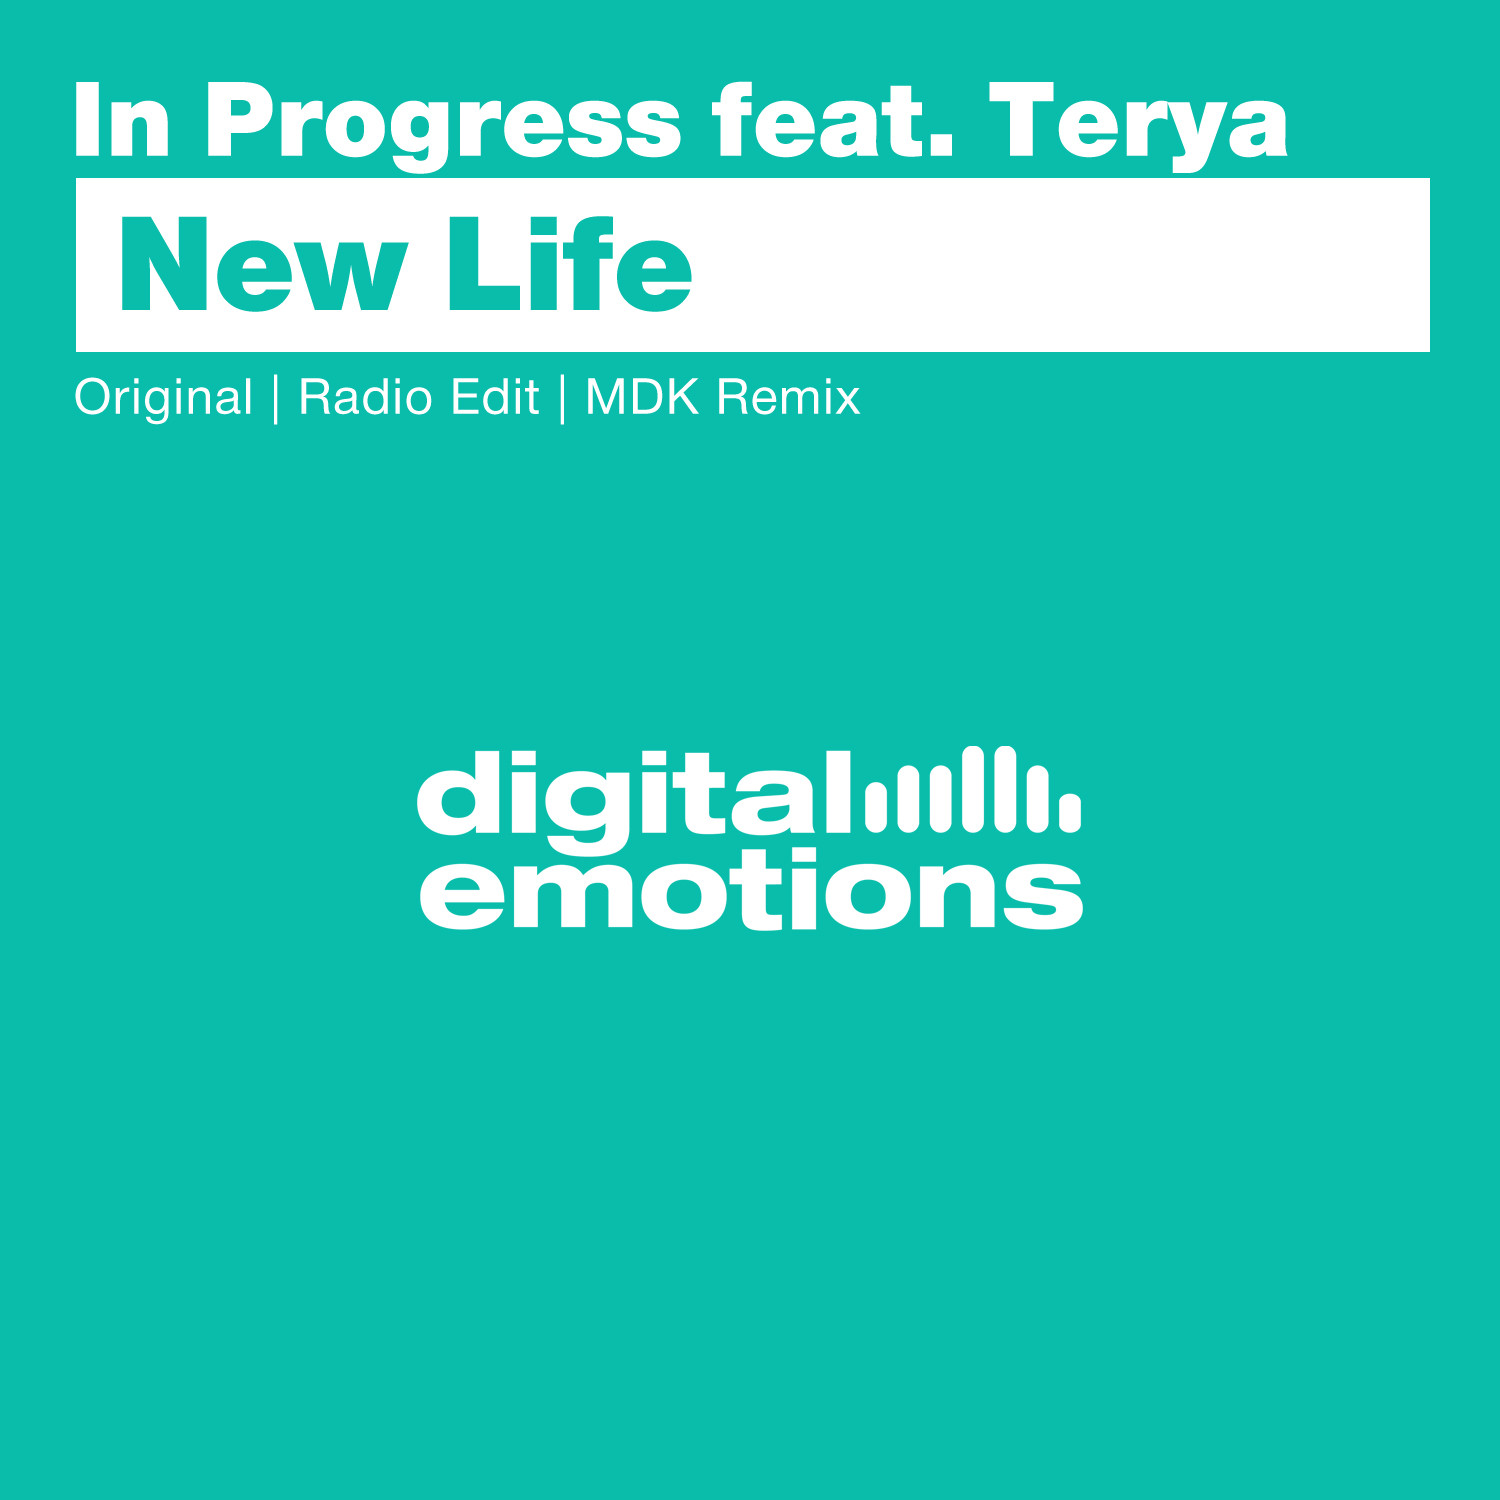 New life песня. In progress New Life. Original Life. [De009] in progress feat. Terya - New Life (2016). N progress & Omnia - Air Flower Cover.